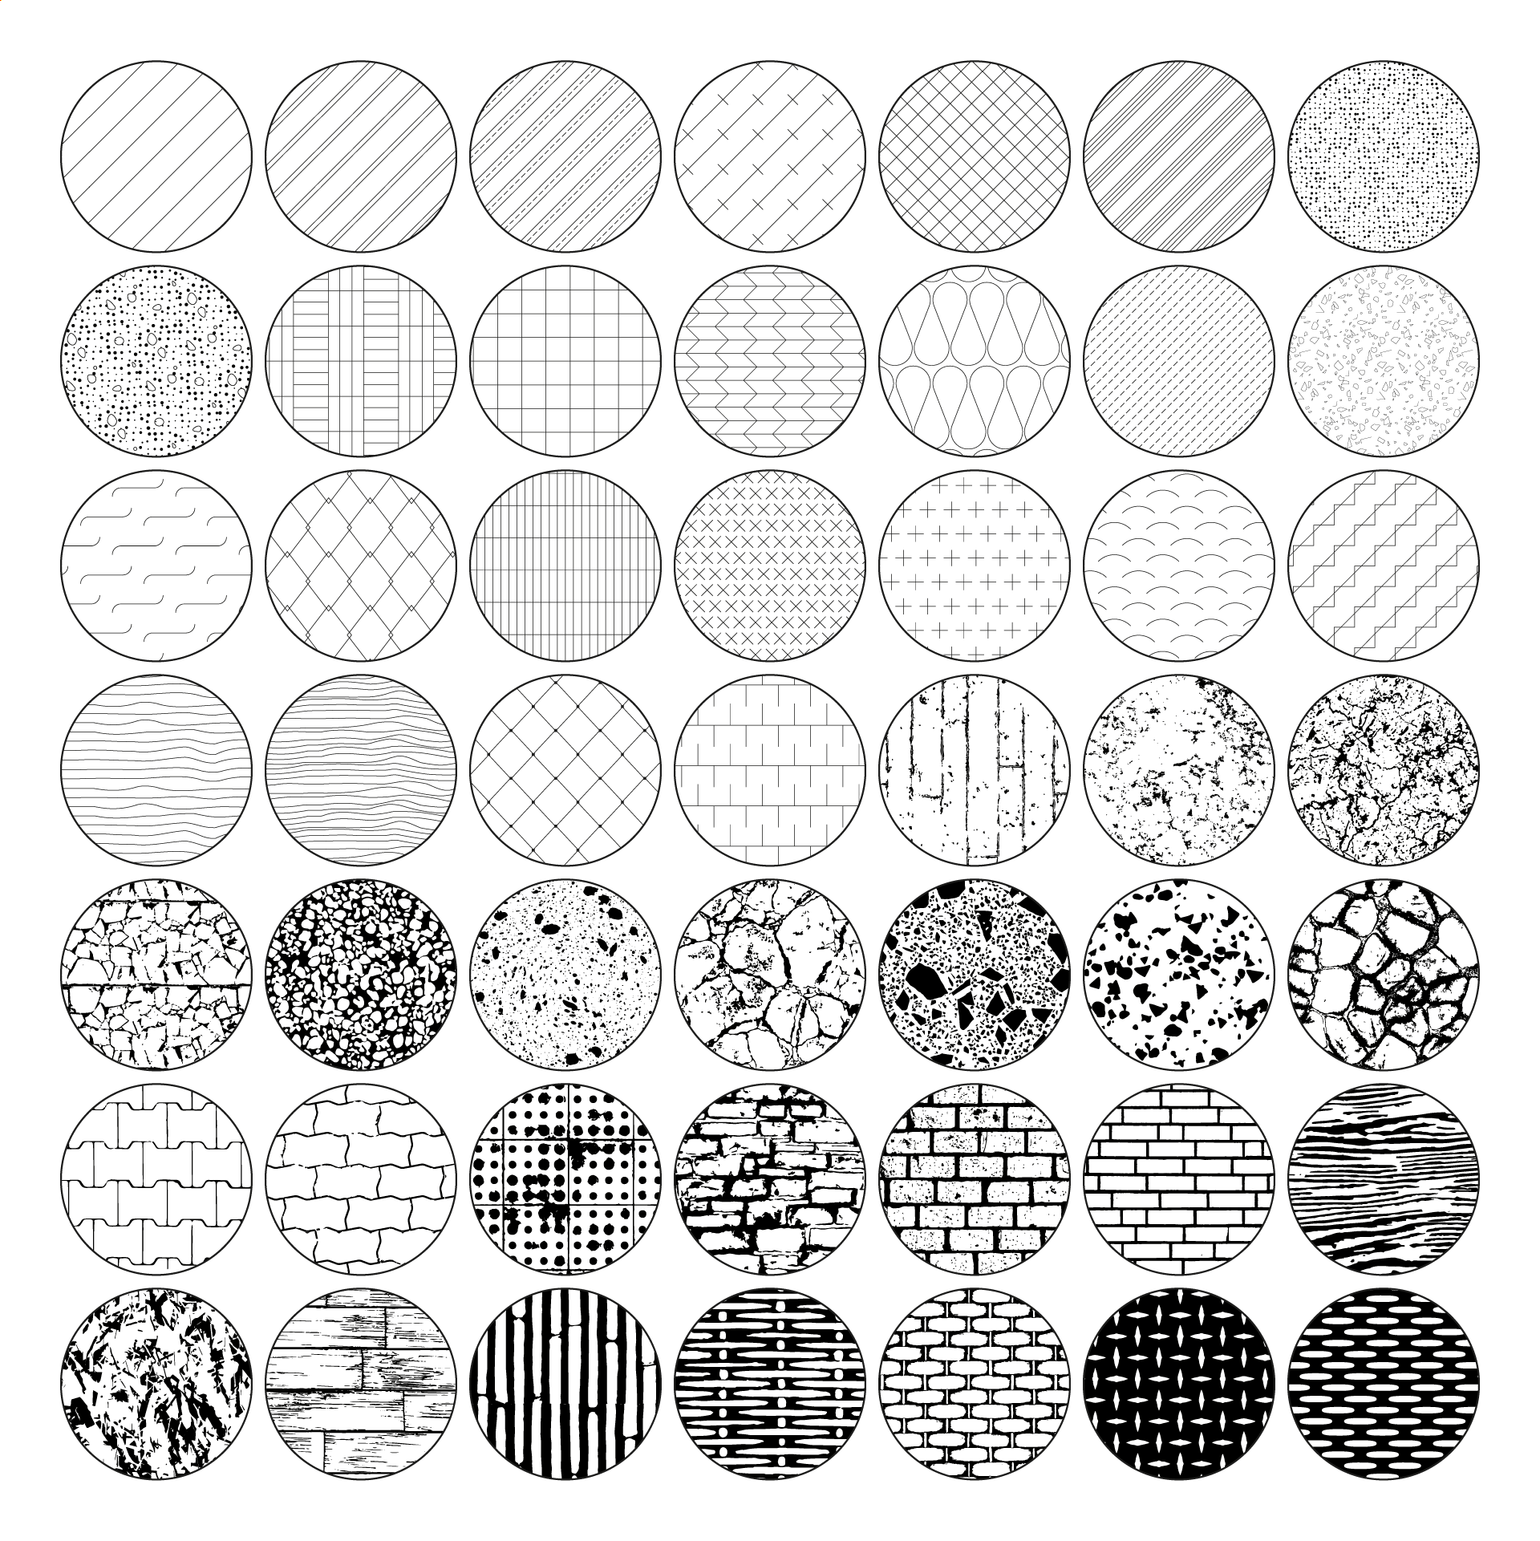 illustrator architectural patterns download